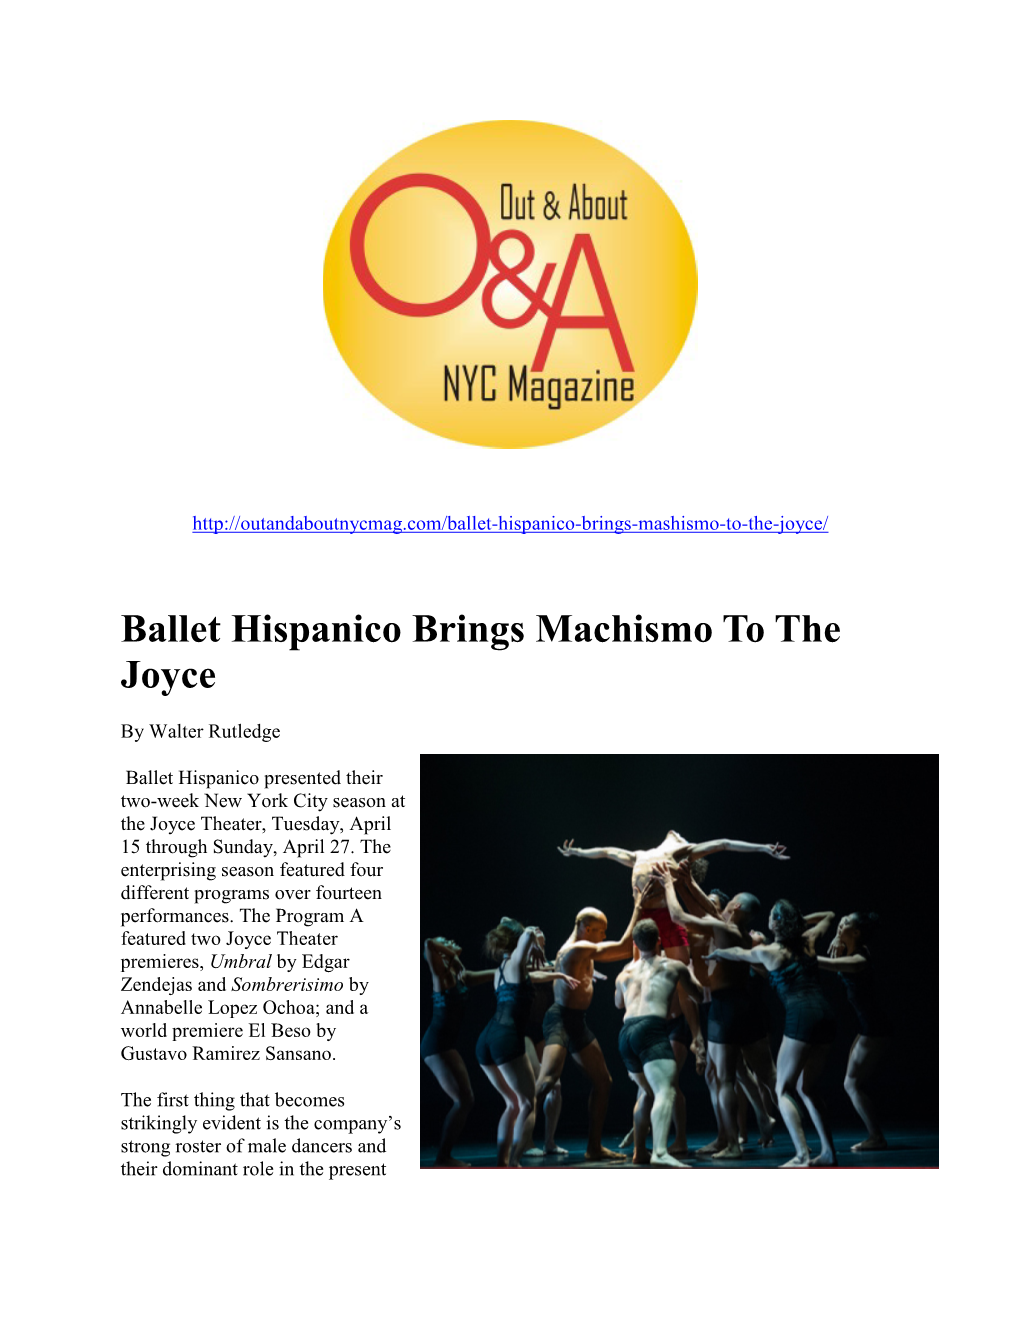 Ballet Hispanico Brings Machismo to the Joyce